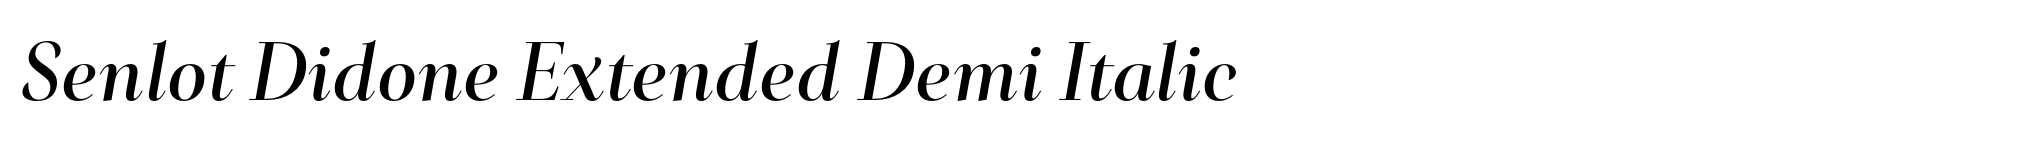 Senlot Didone Extended Demi Italic image